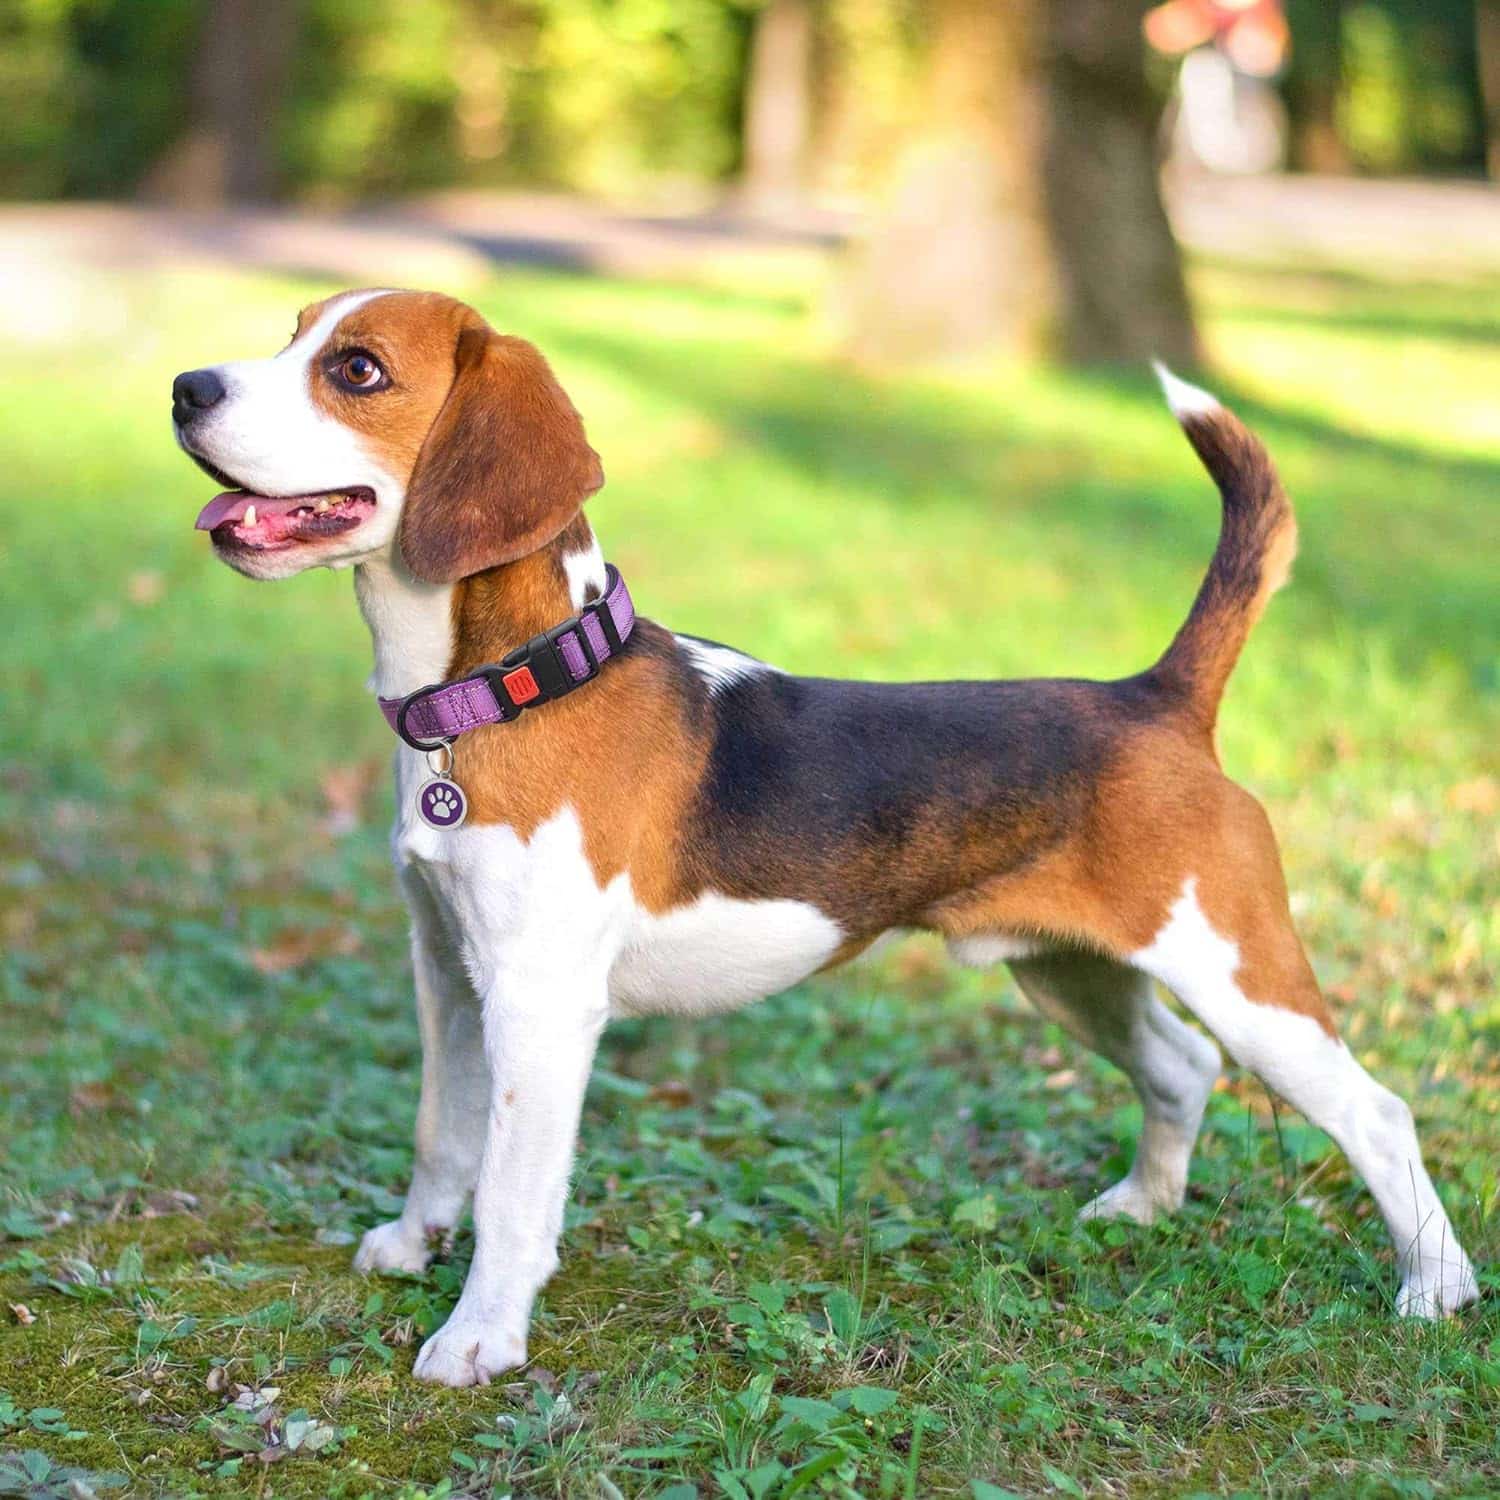 tobeDRI Reflective Nylon Dog Collar – A Review of the Ultimate Dog Accessory